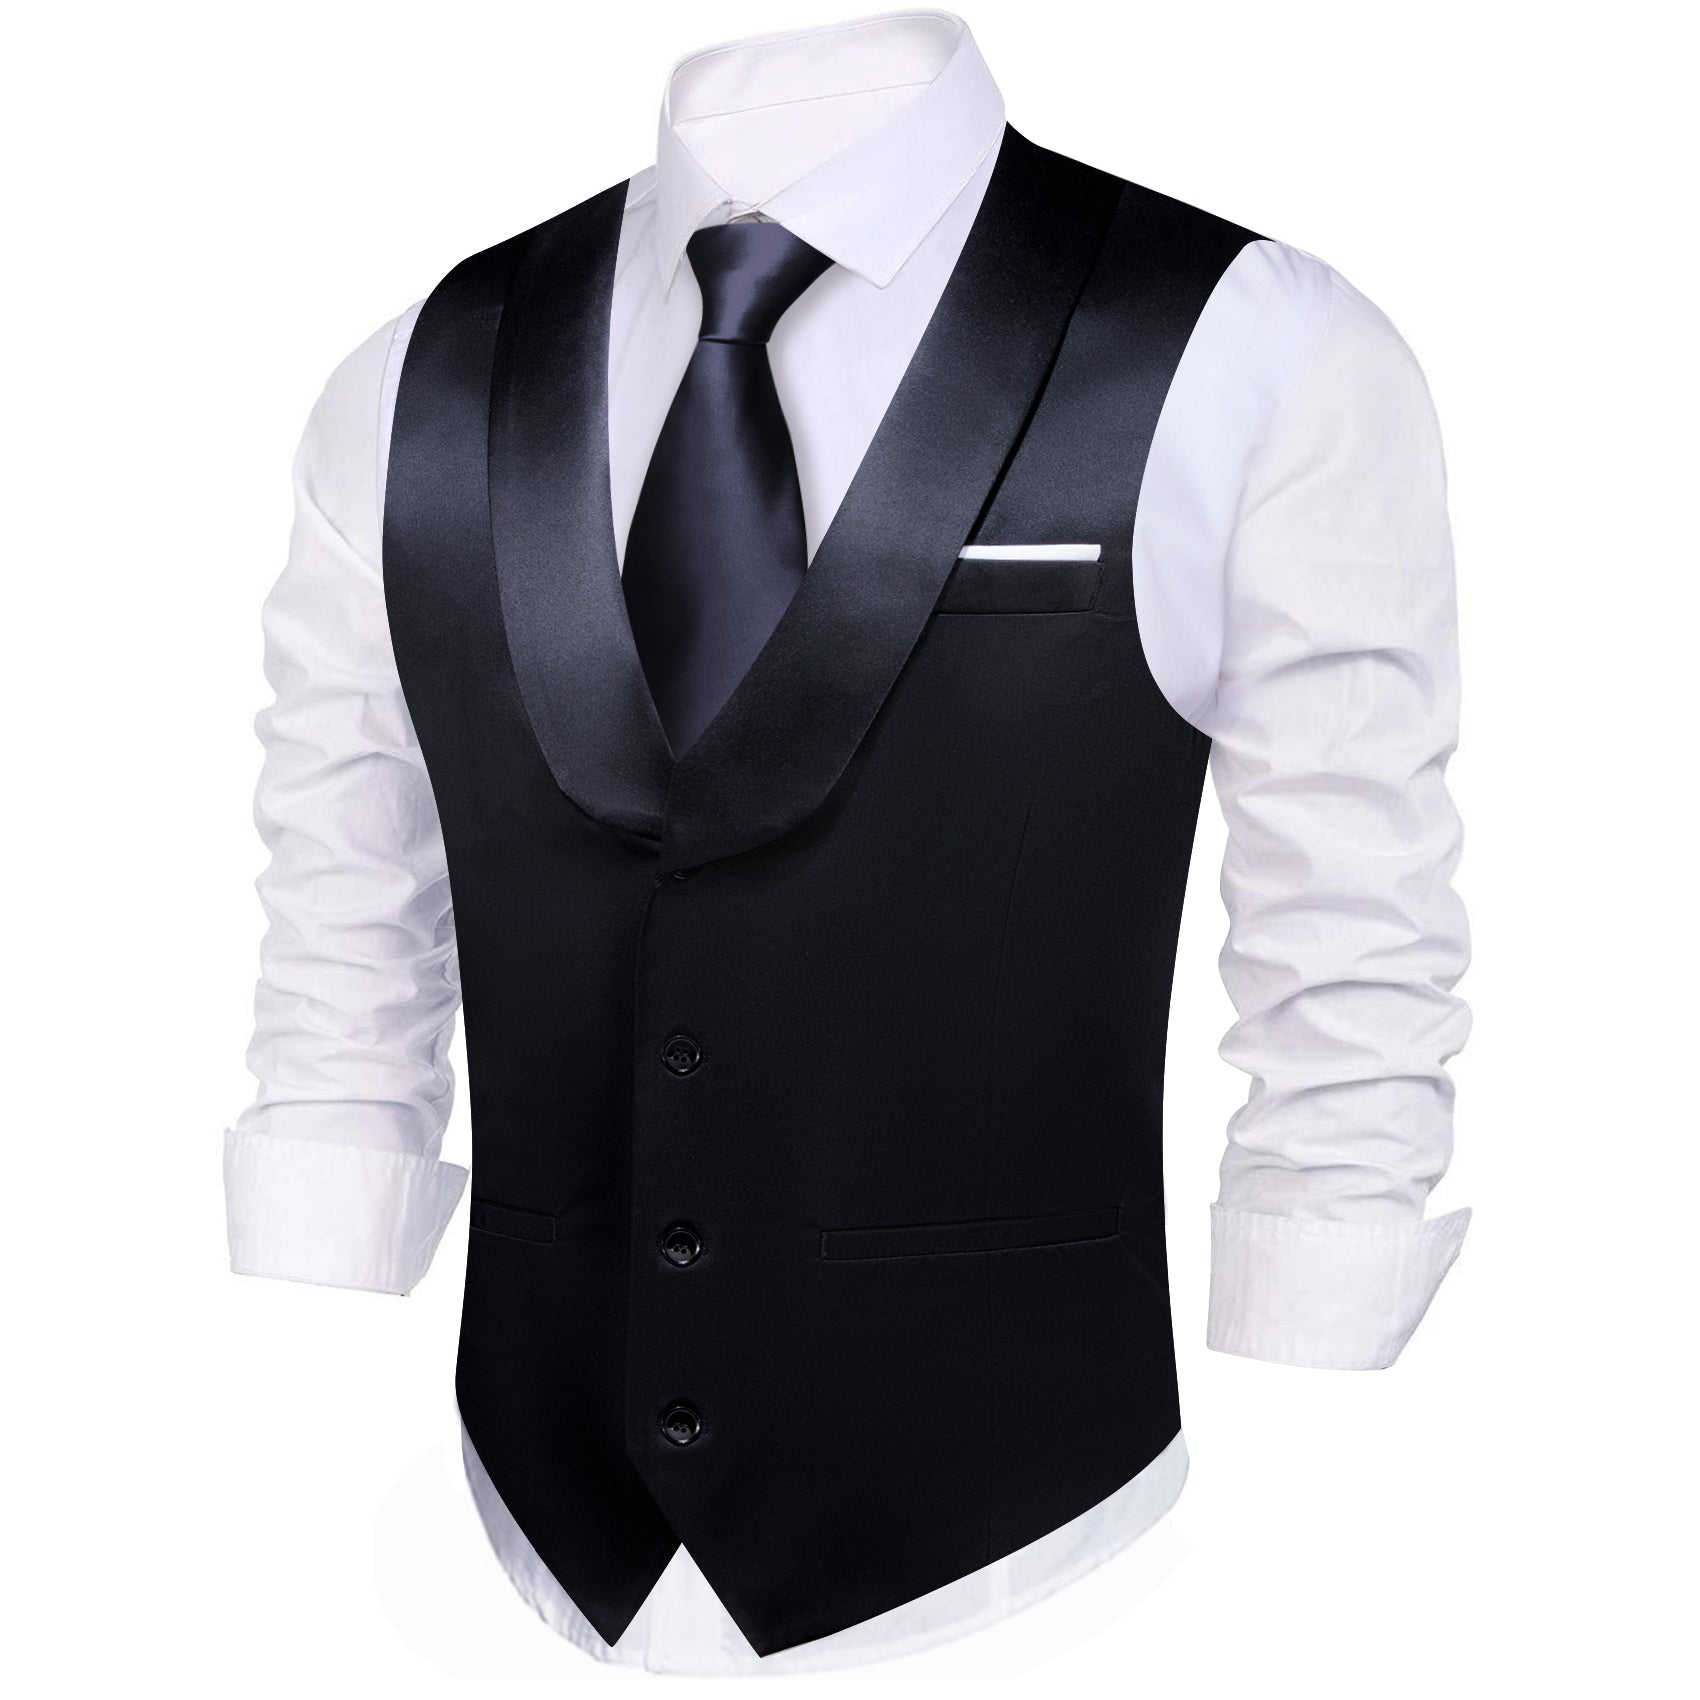 Barry.wang Novetly Black Solid Vest Waistcoat Set